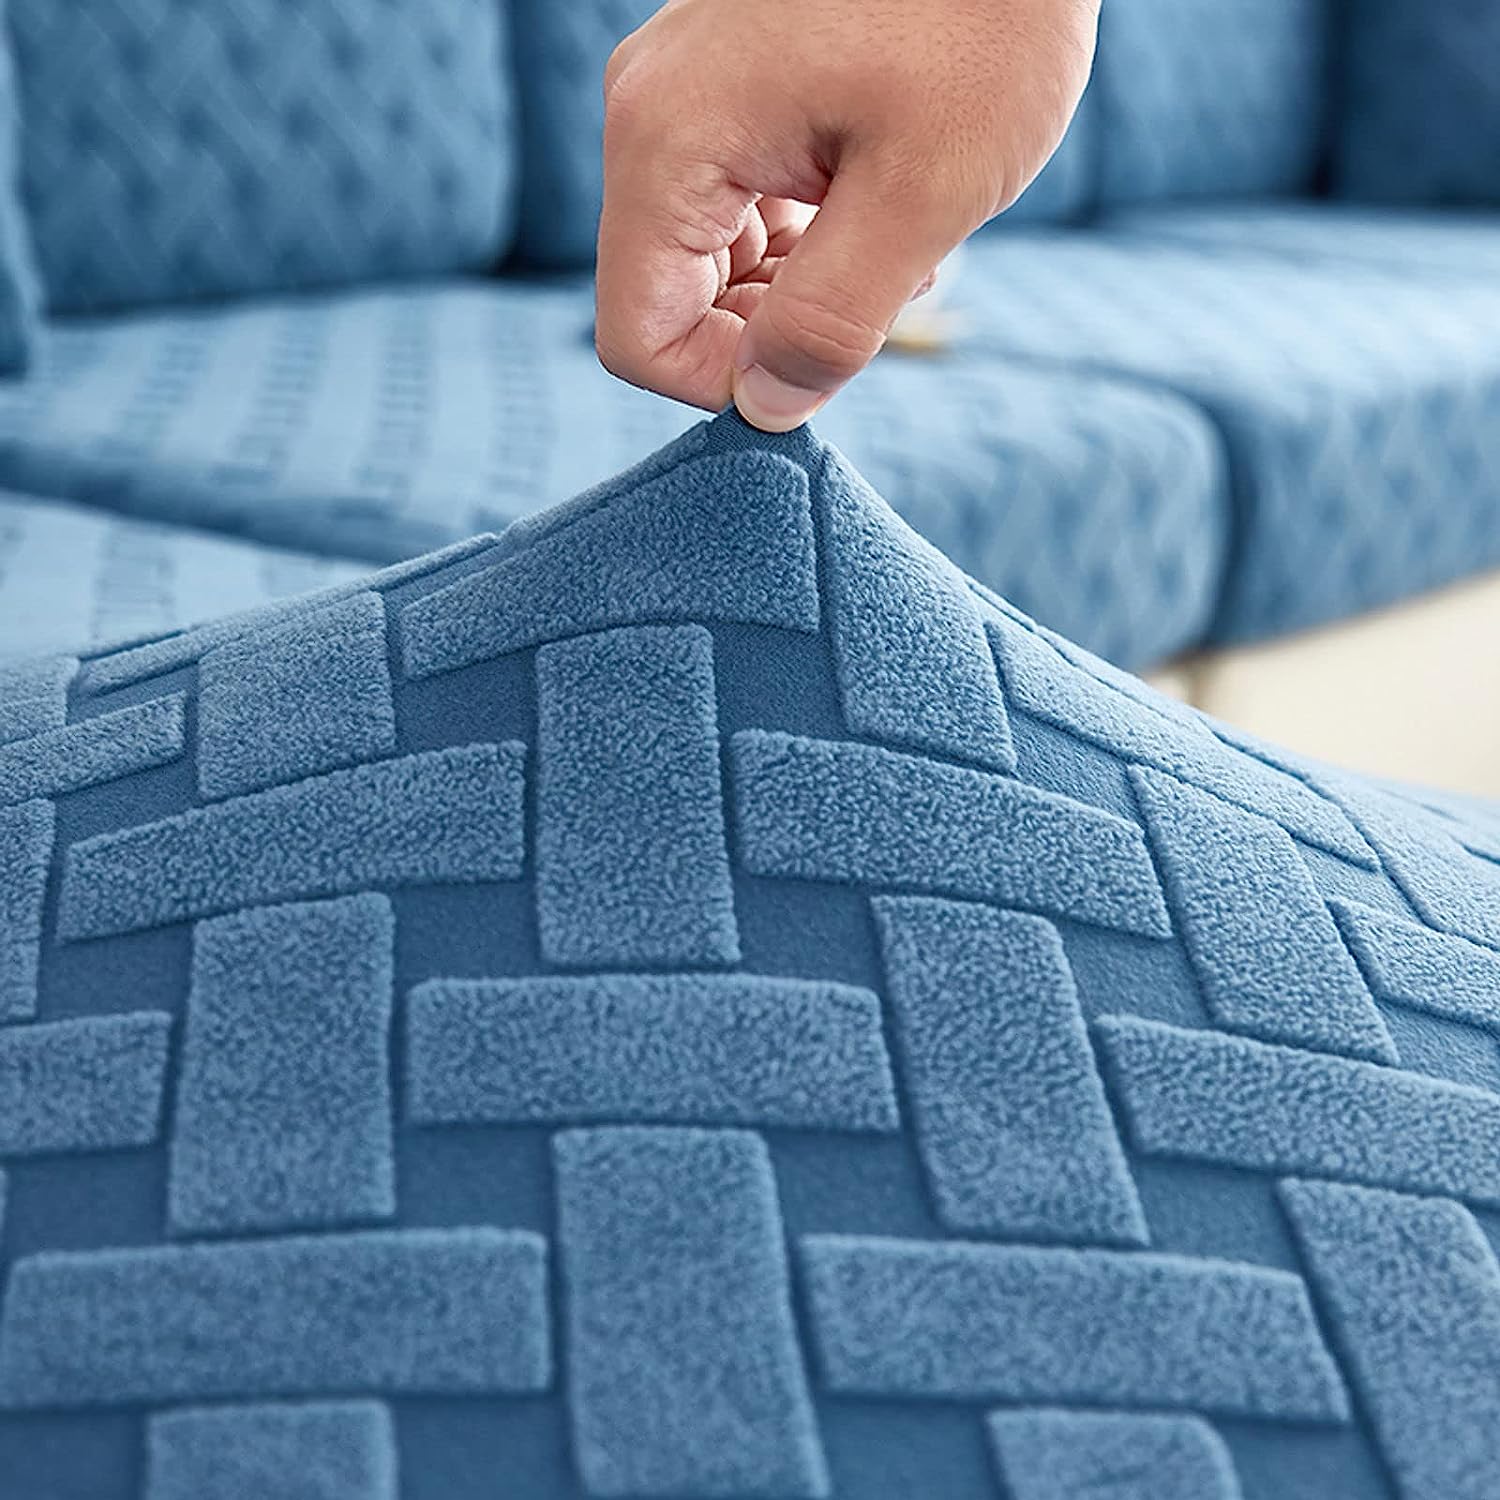 Sofa Cushion Cover - Denim Blue - Soft Elastic Jacquard Weave